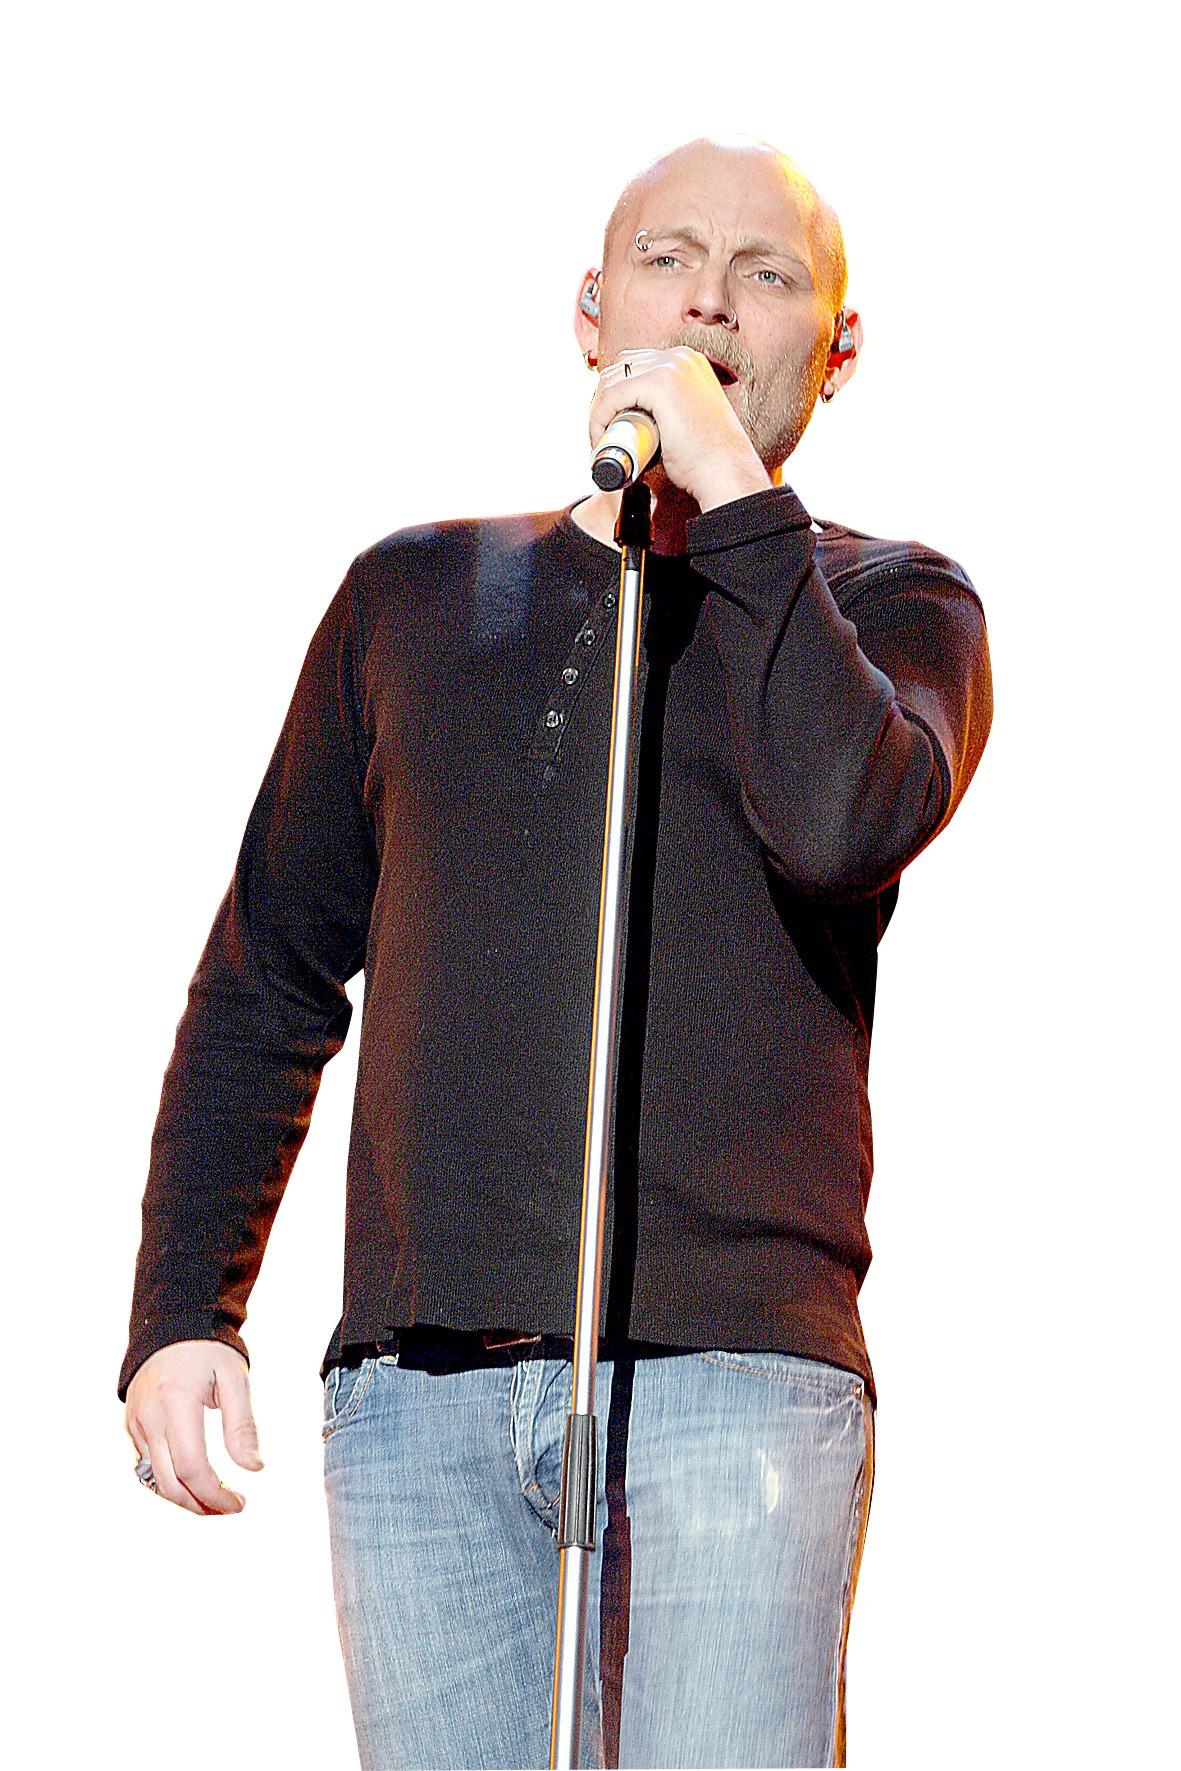 I Melodifestivalen 2008.